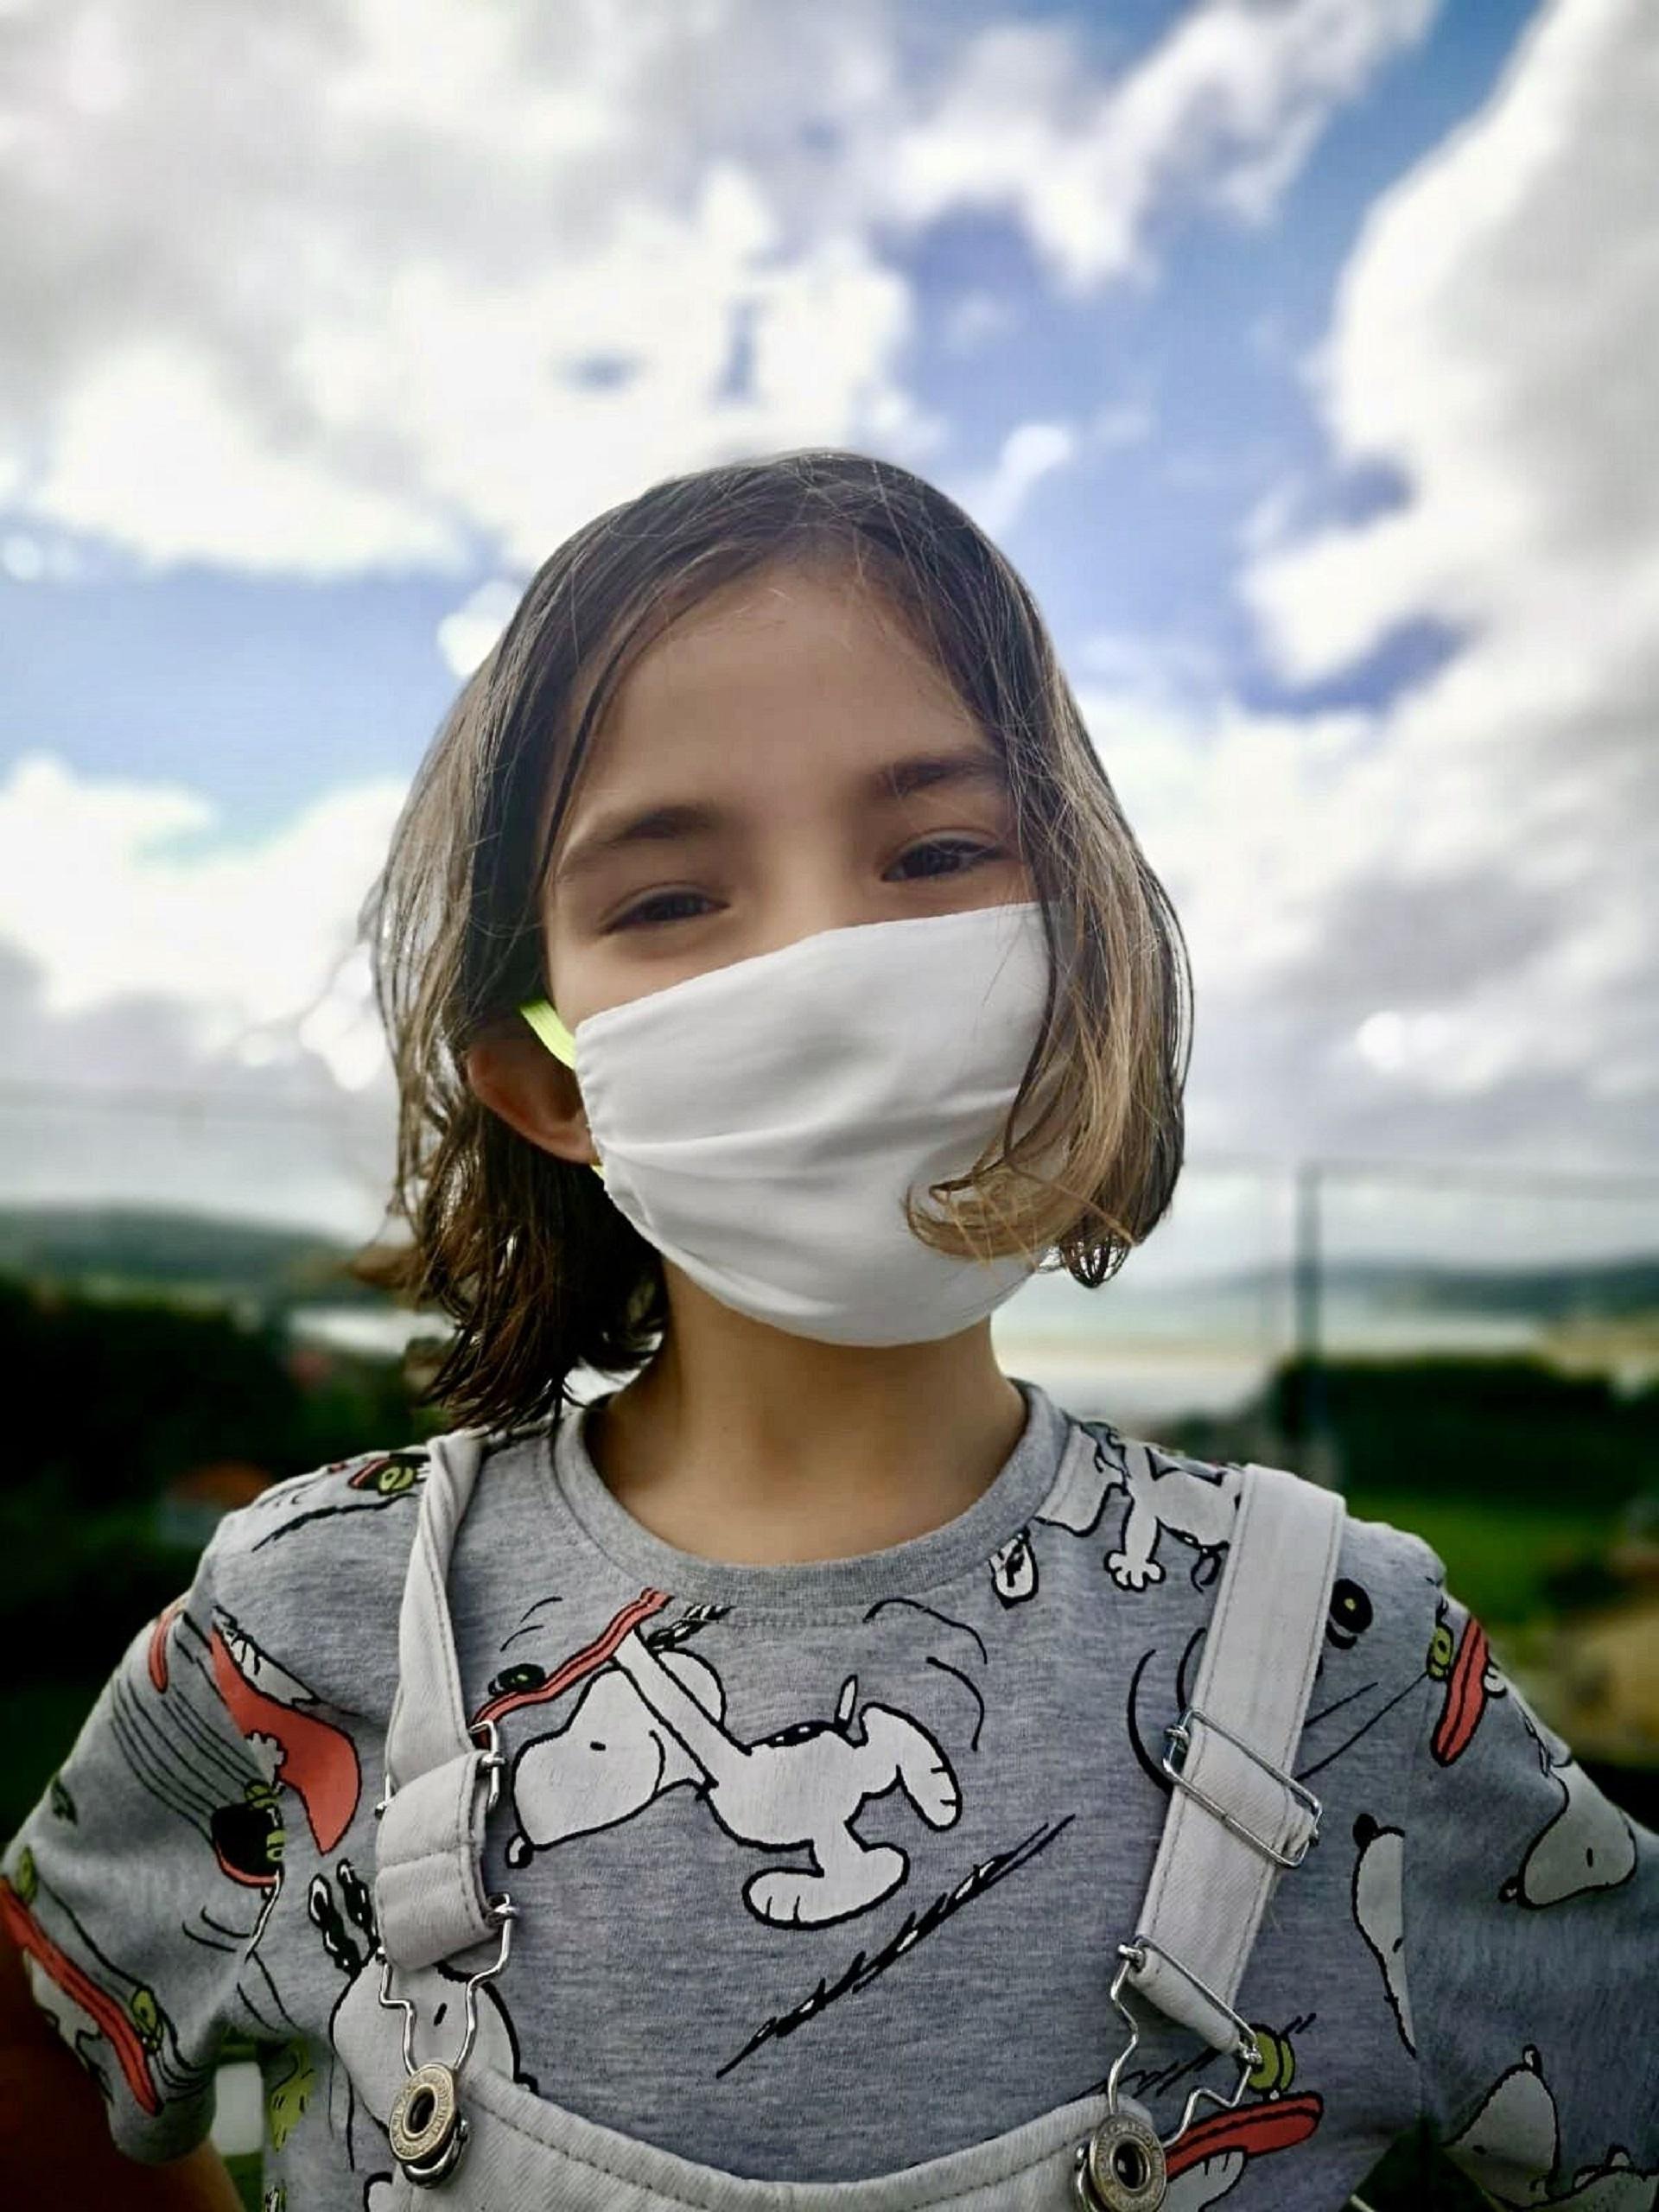 María, hija de Cristina Giraldo, pasea con su mascarilla higiénica reutilizable.